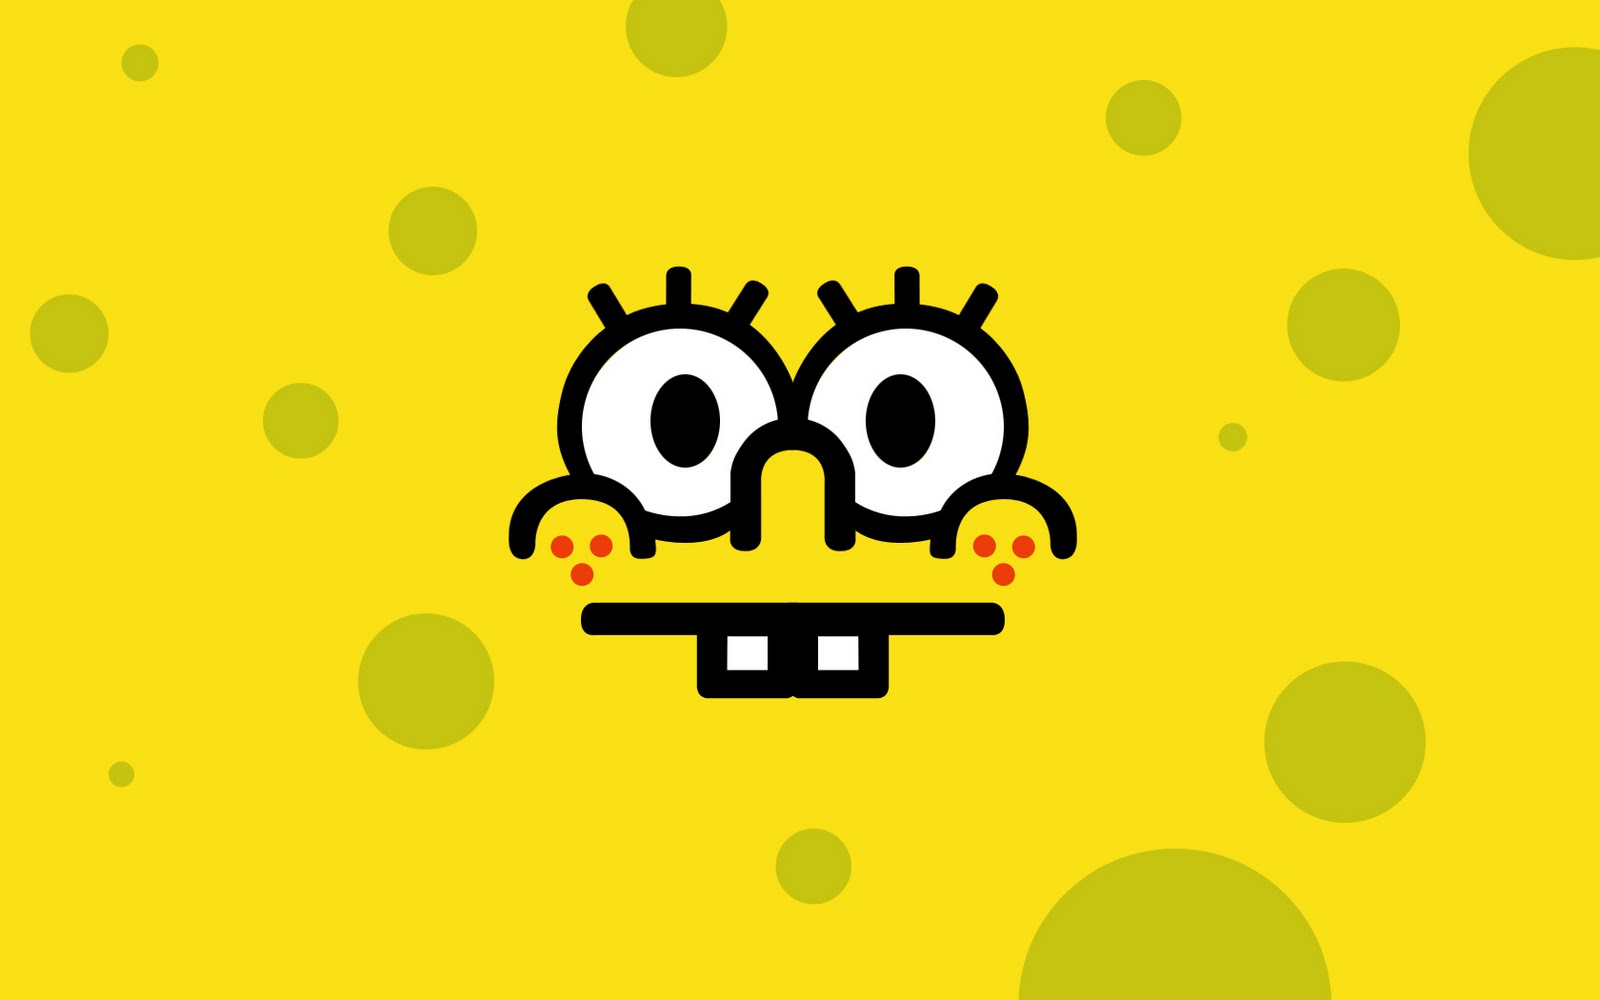 SpongeBob SquarePants Wallpaper 4K, Monkey